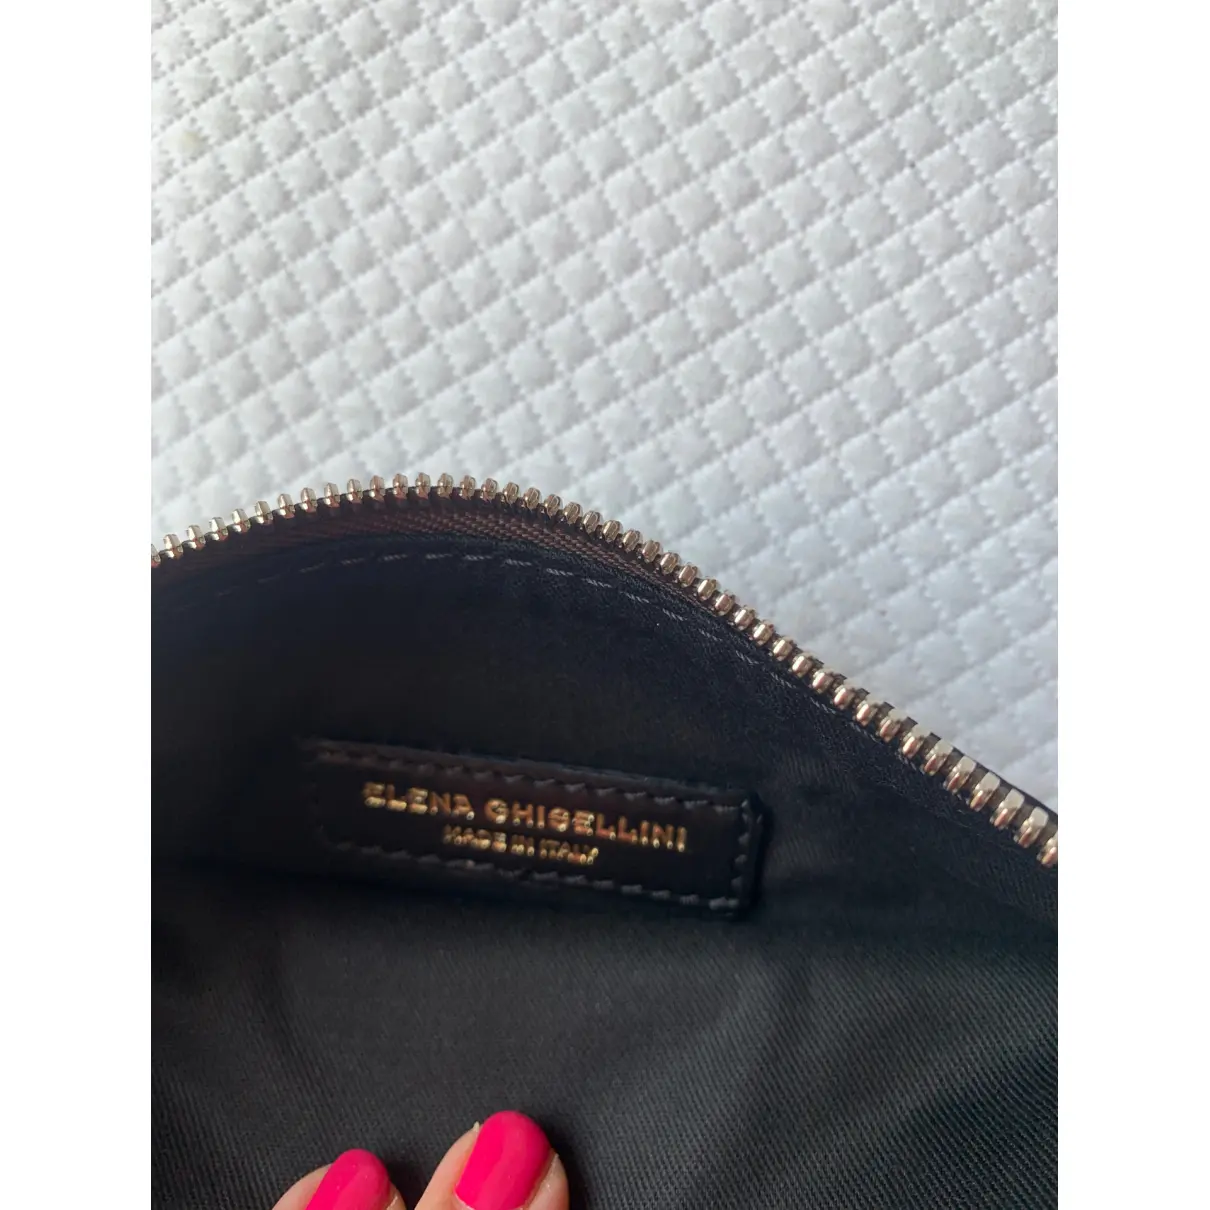 Luxury Elena Ghisellini Clutch bags Women